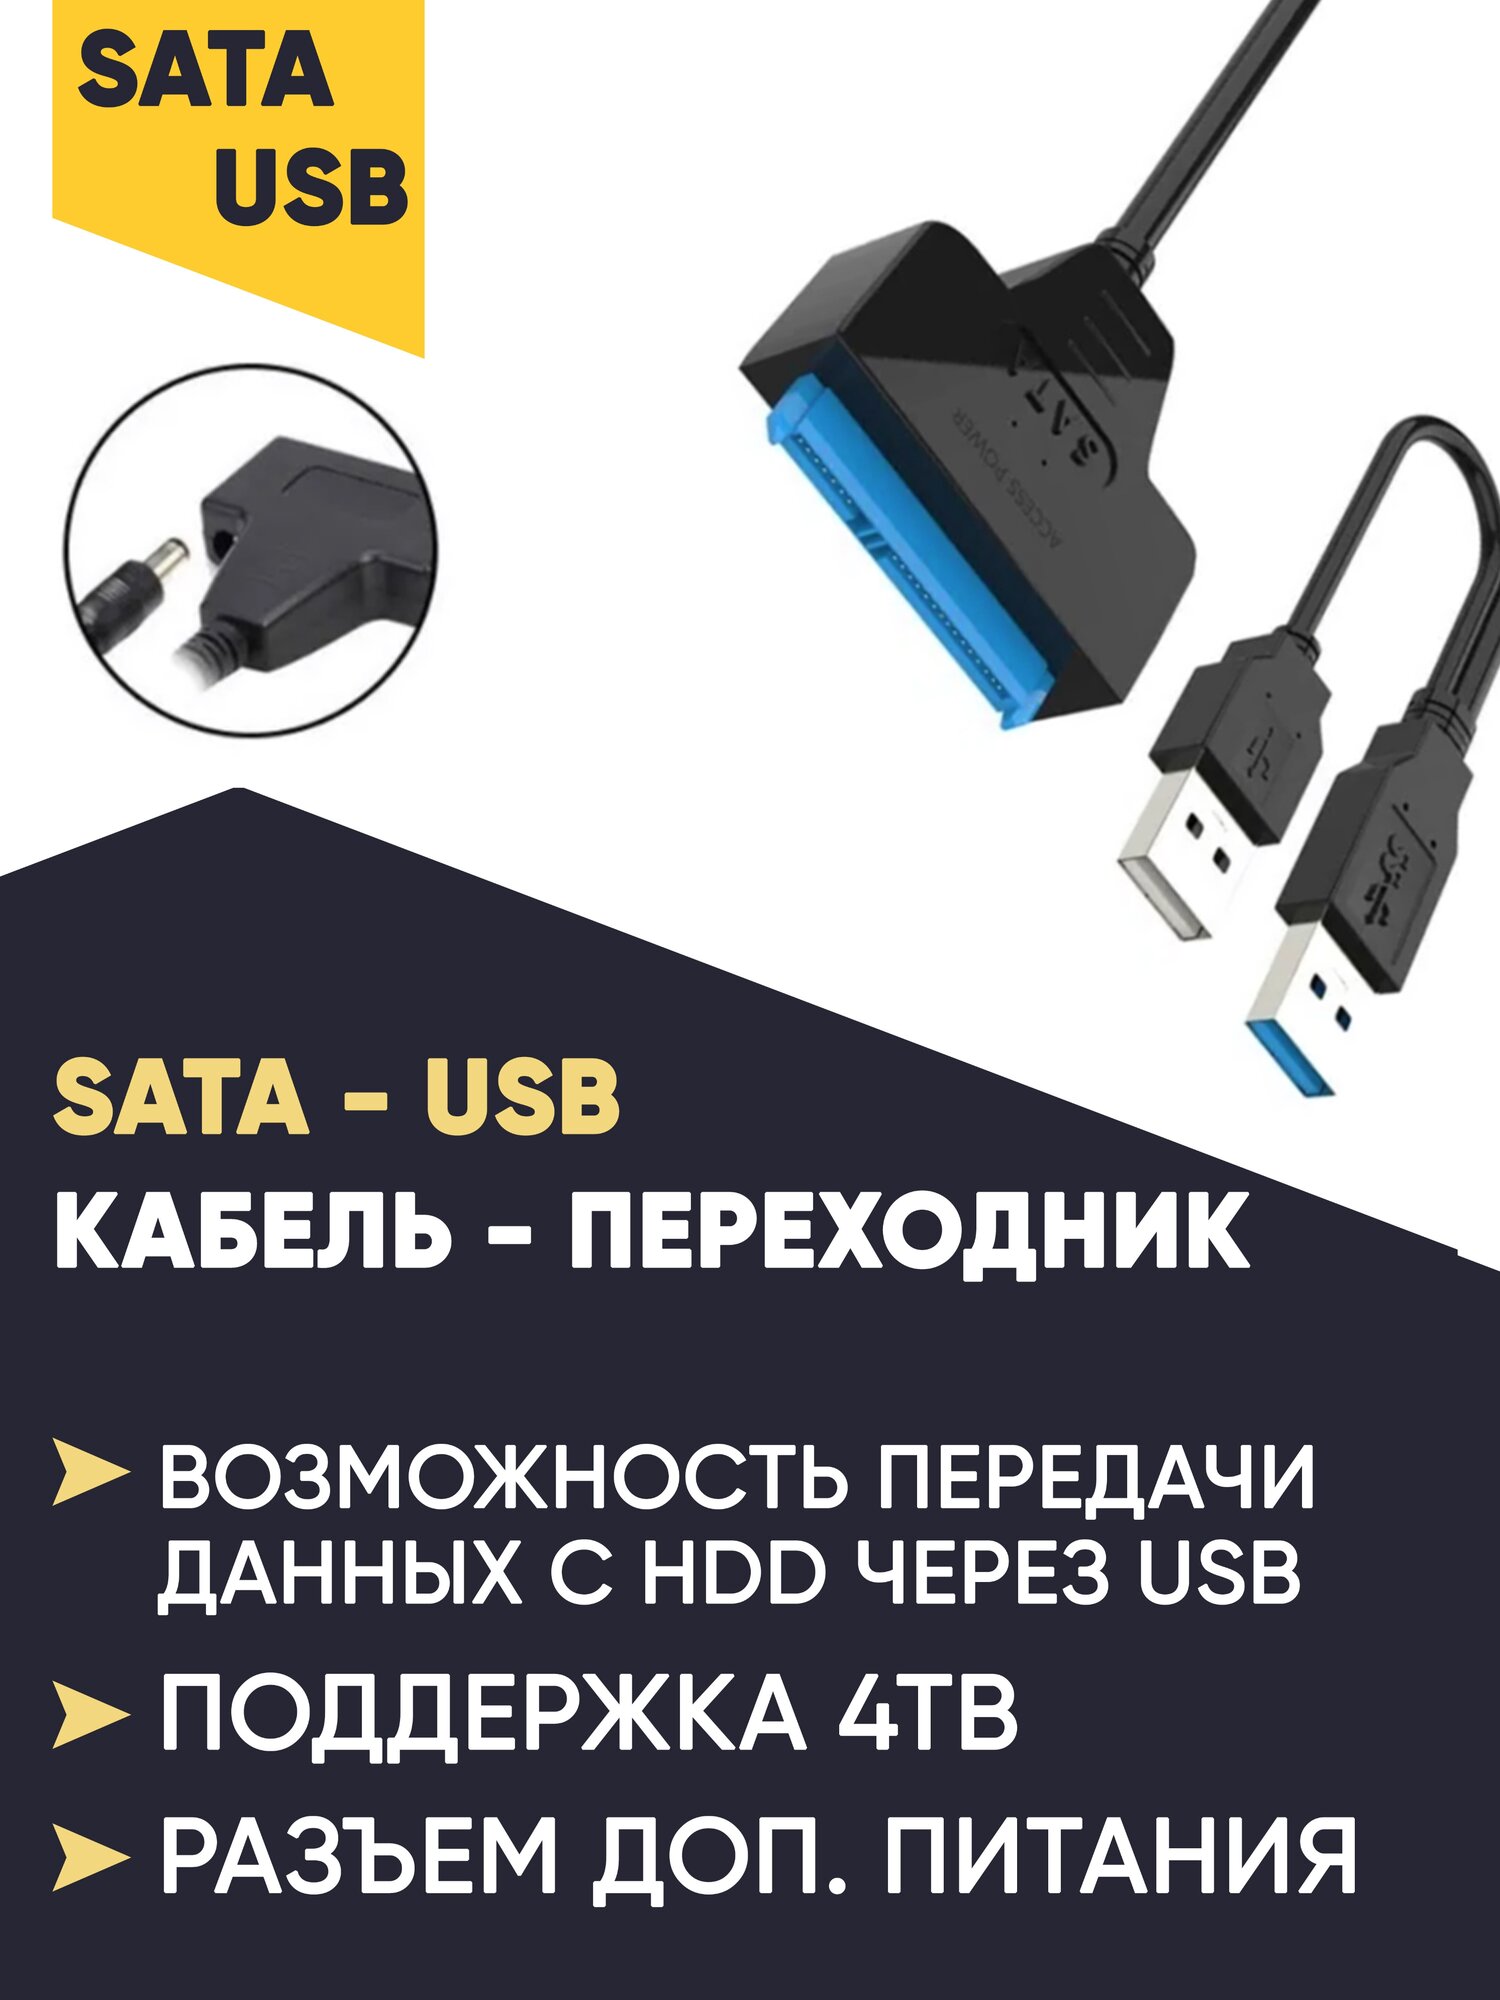 Кабель переходник для подключения жесткого диска / SSD через USB SATA-USB USB 3.0